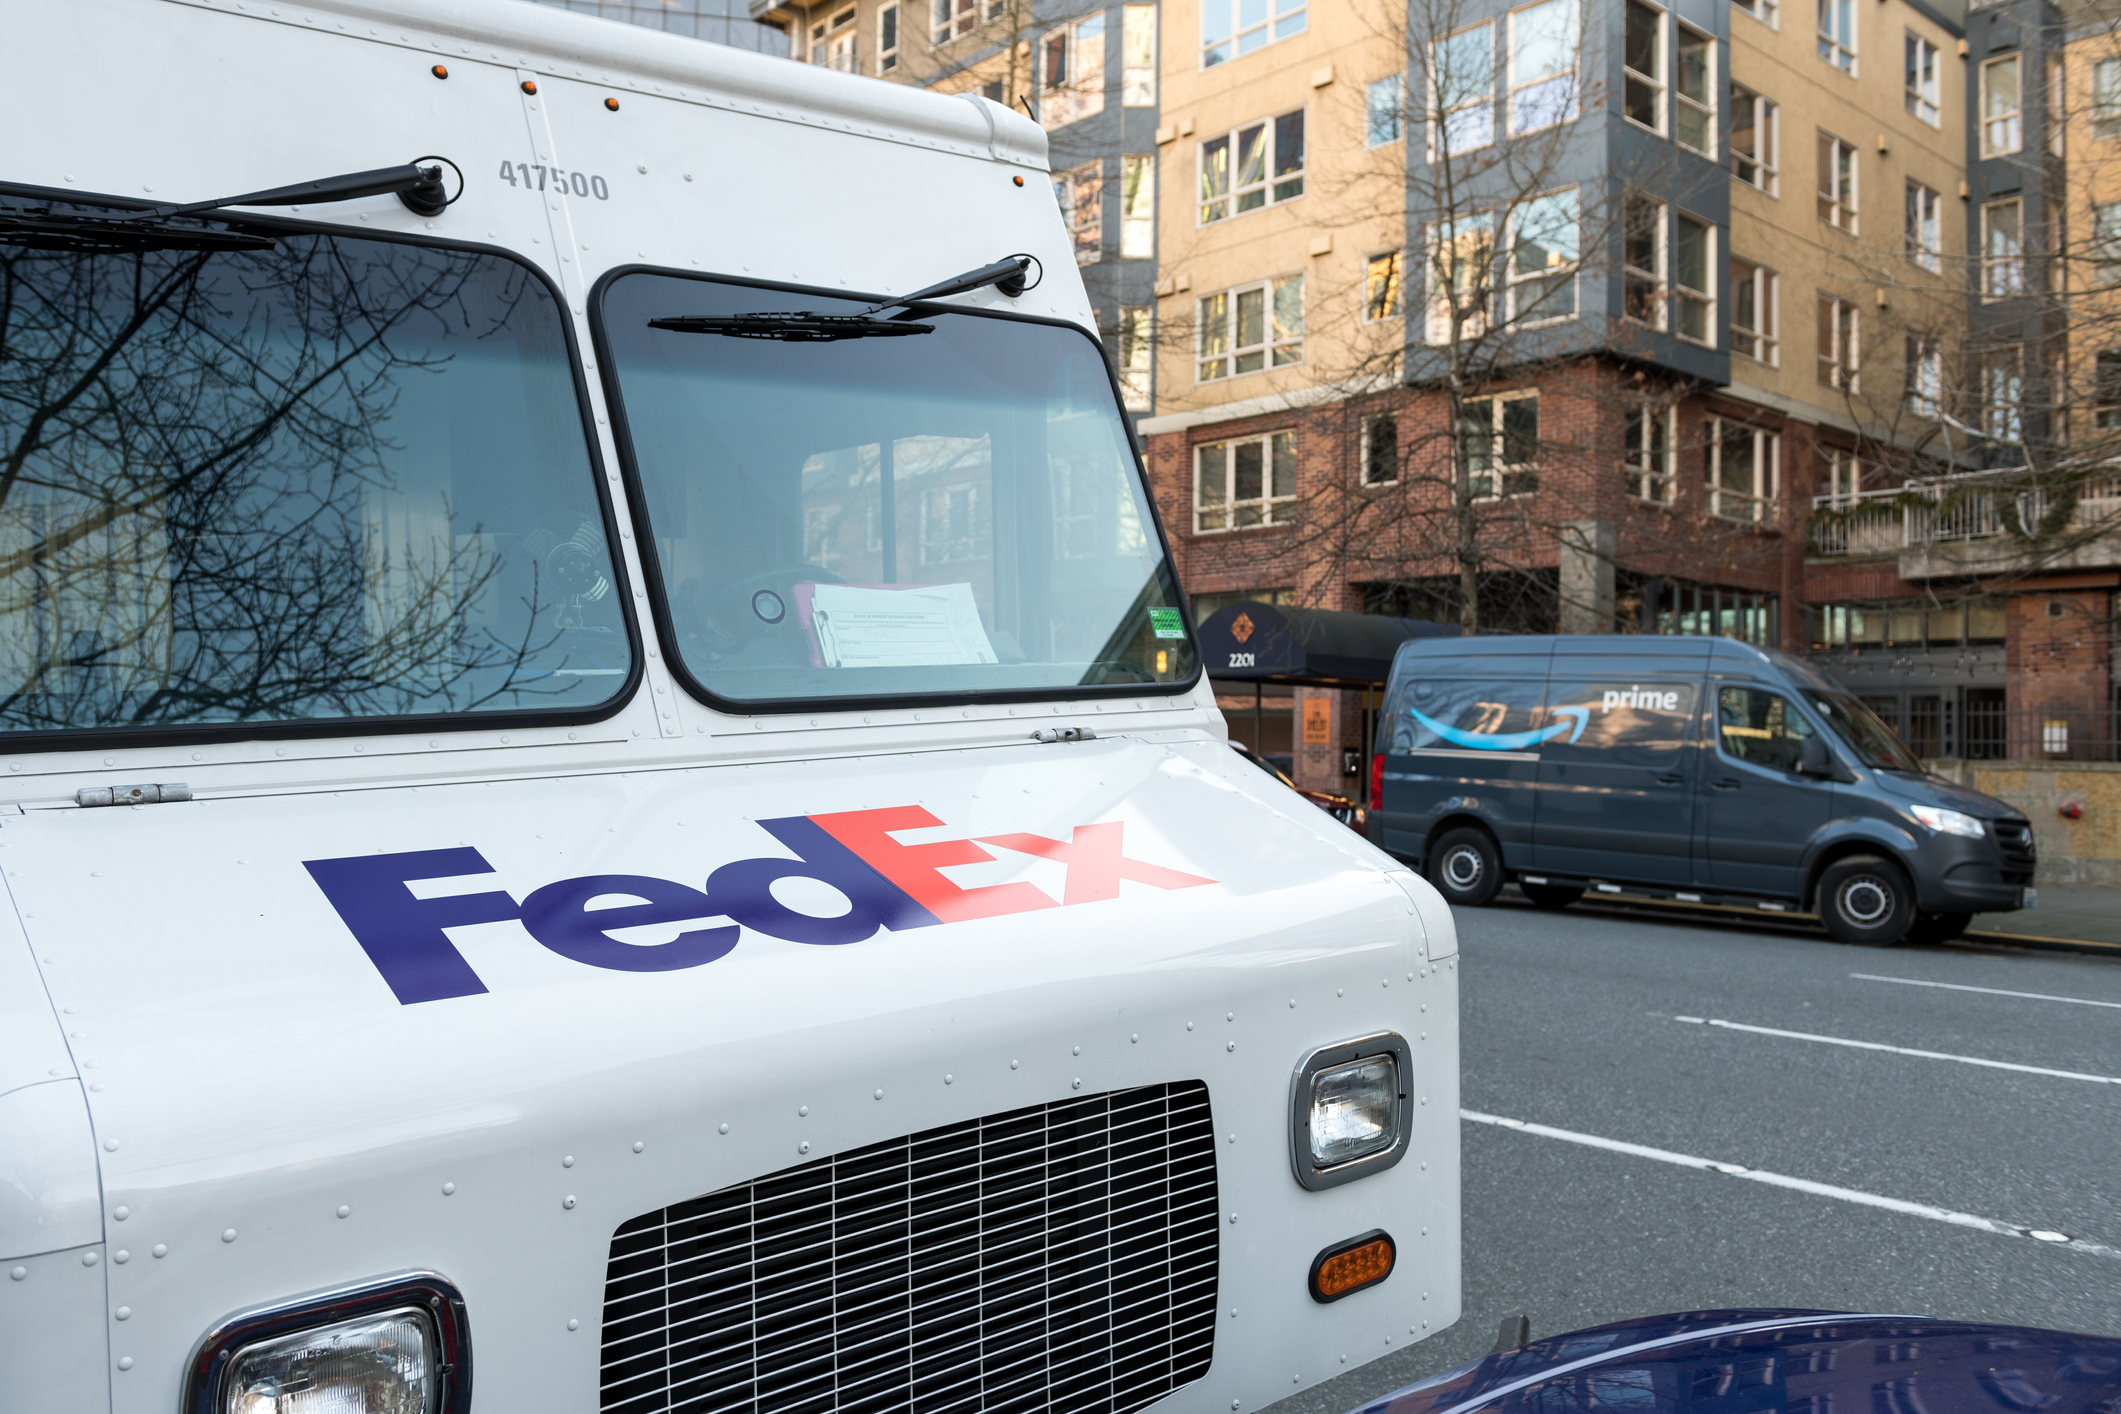 FedEx and Amazon trucks